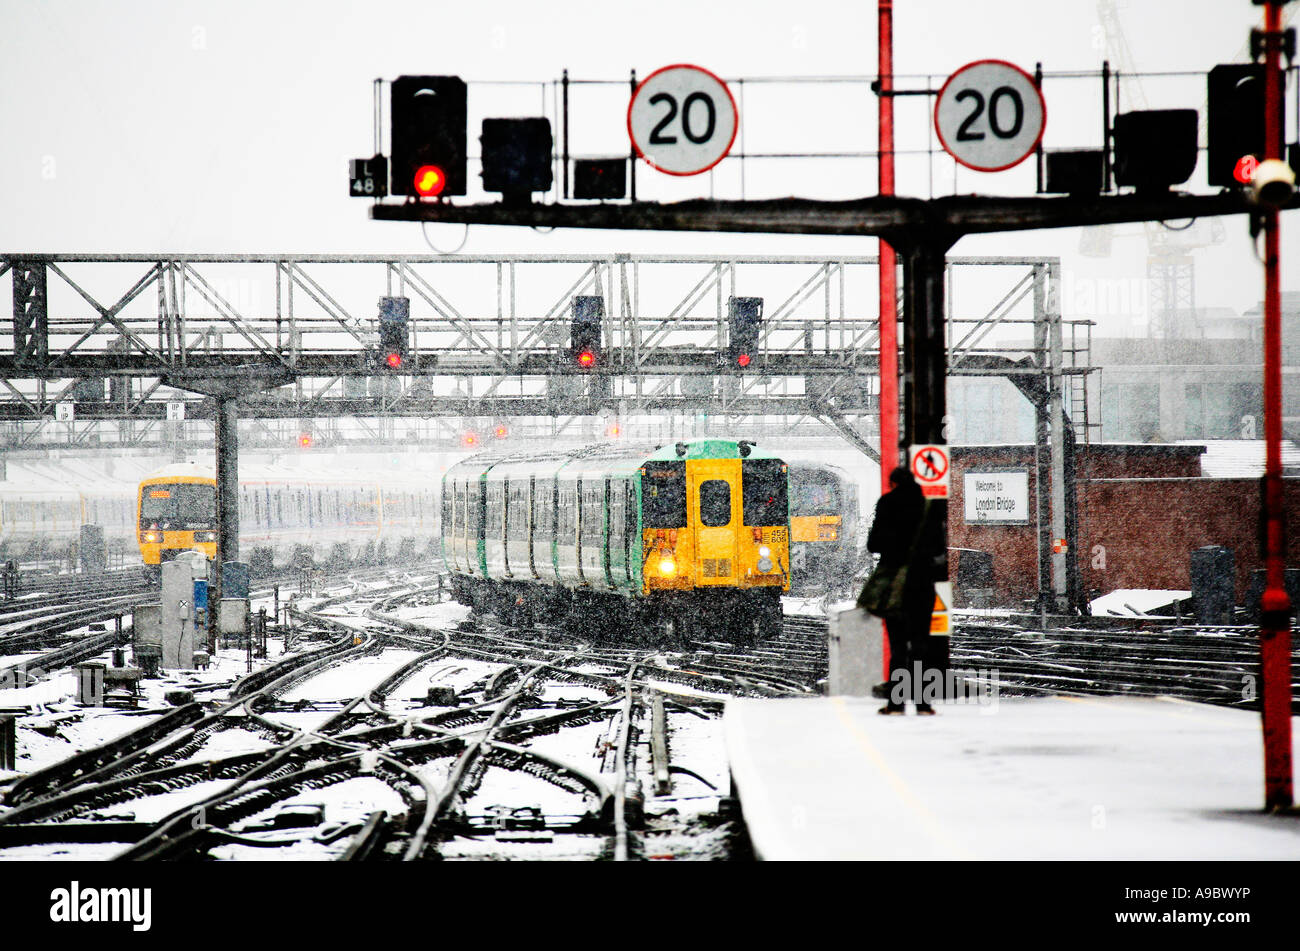 London urban train in snow at London Bridge station Stock Photo